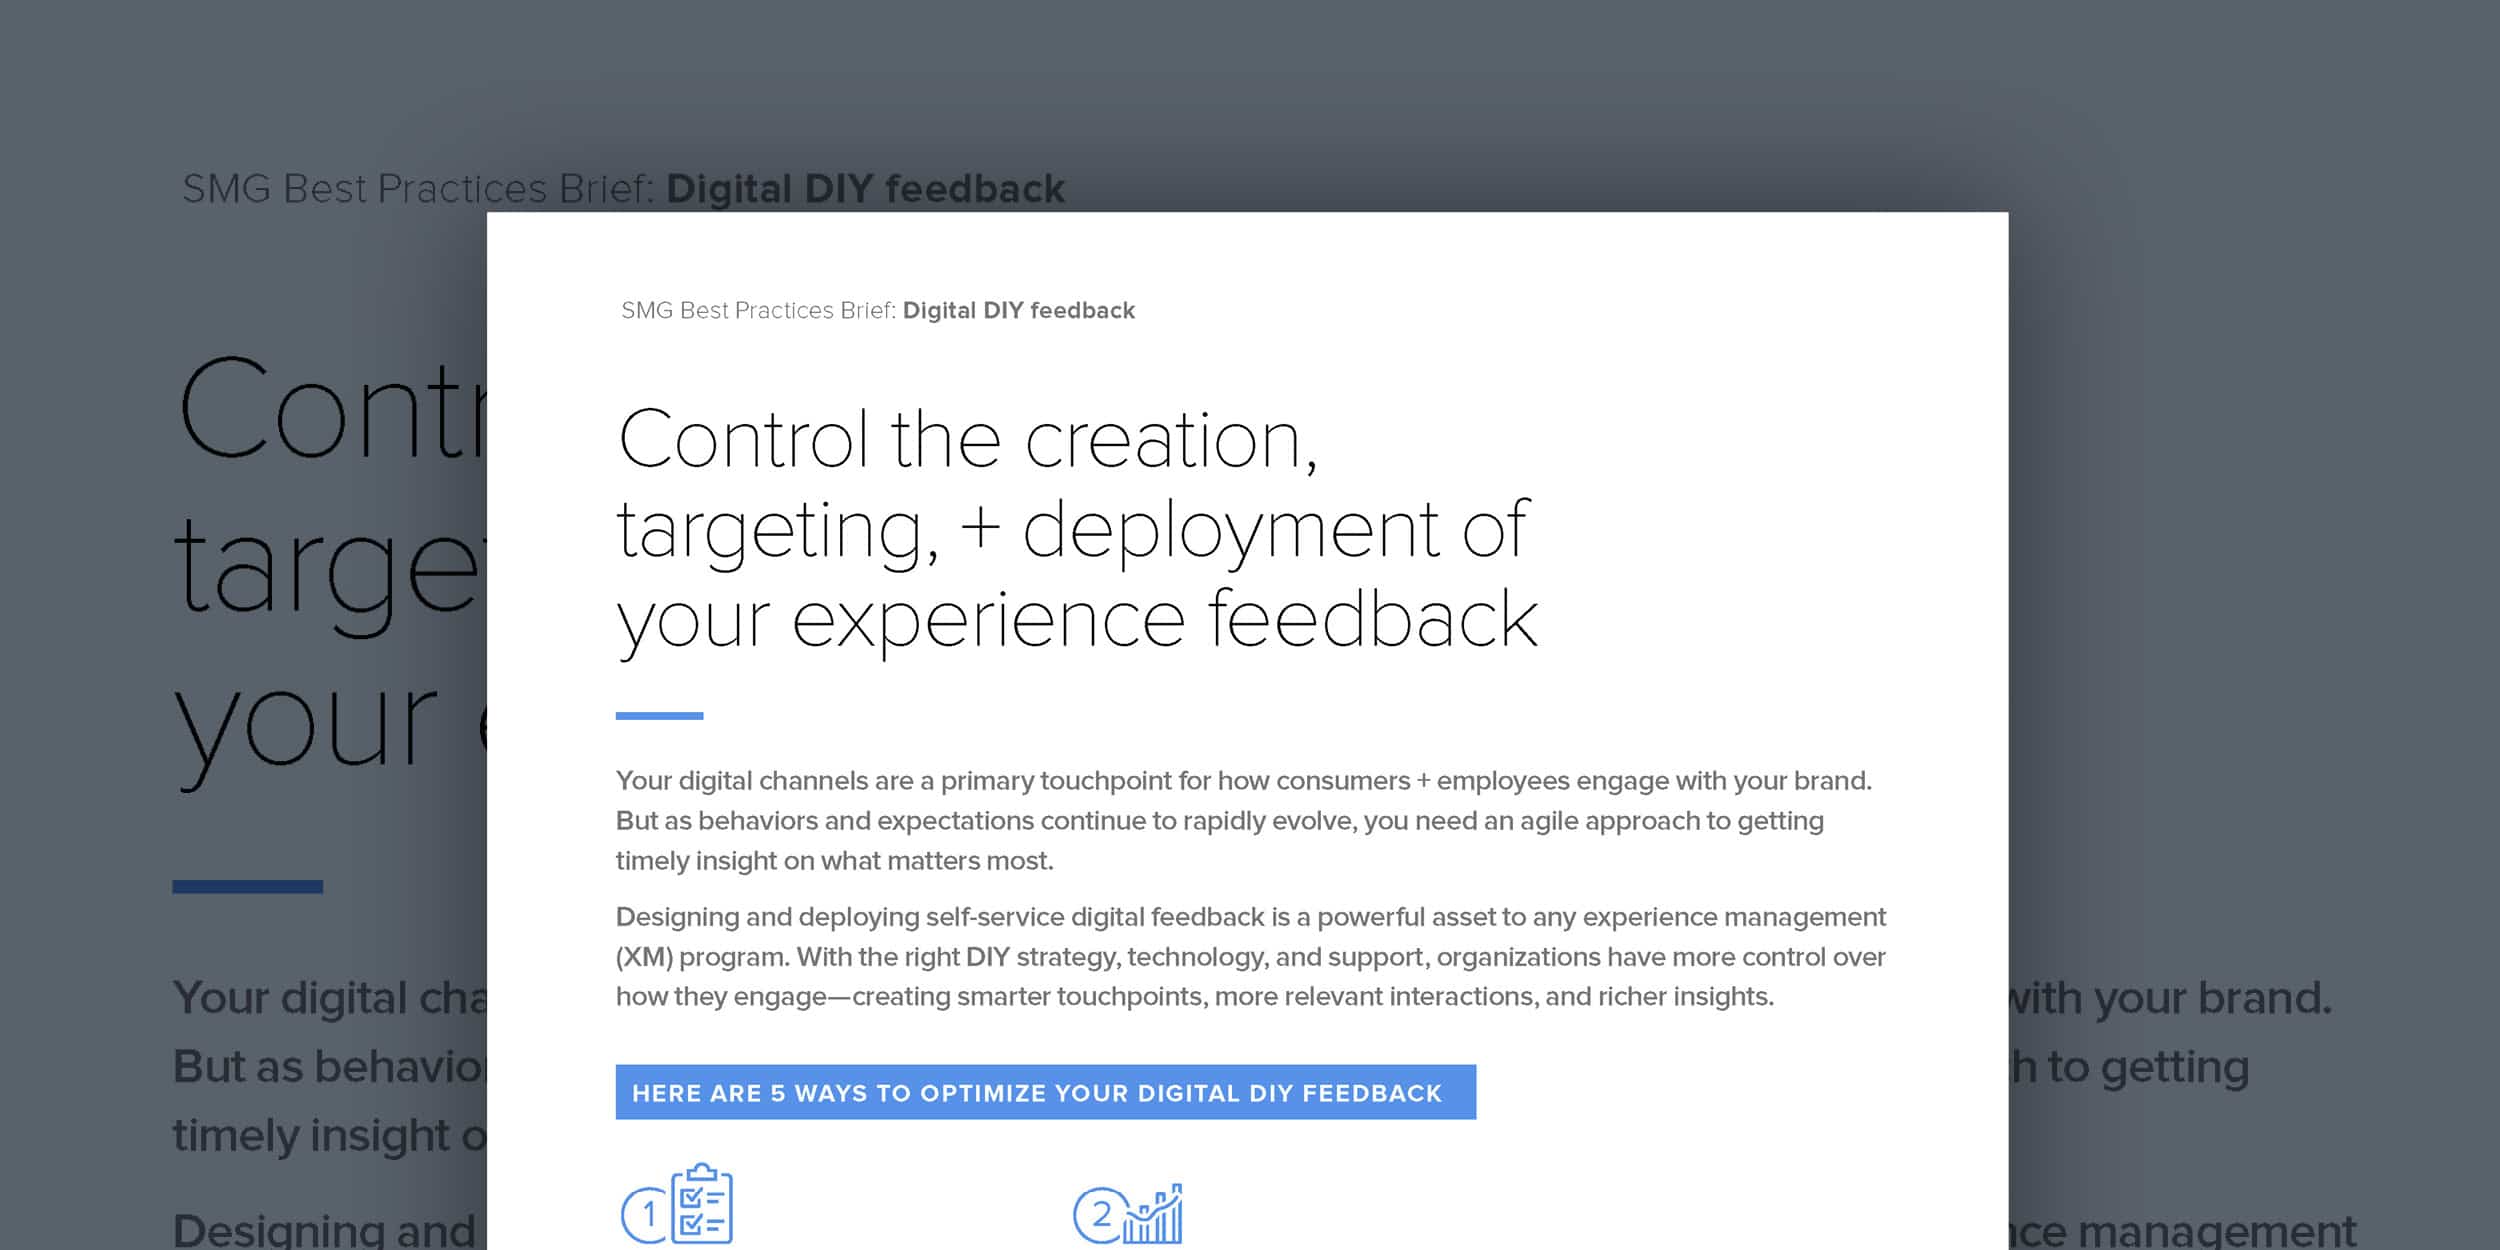 SMG Best Practices Brief: Digital DIY feedback